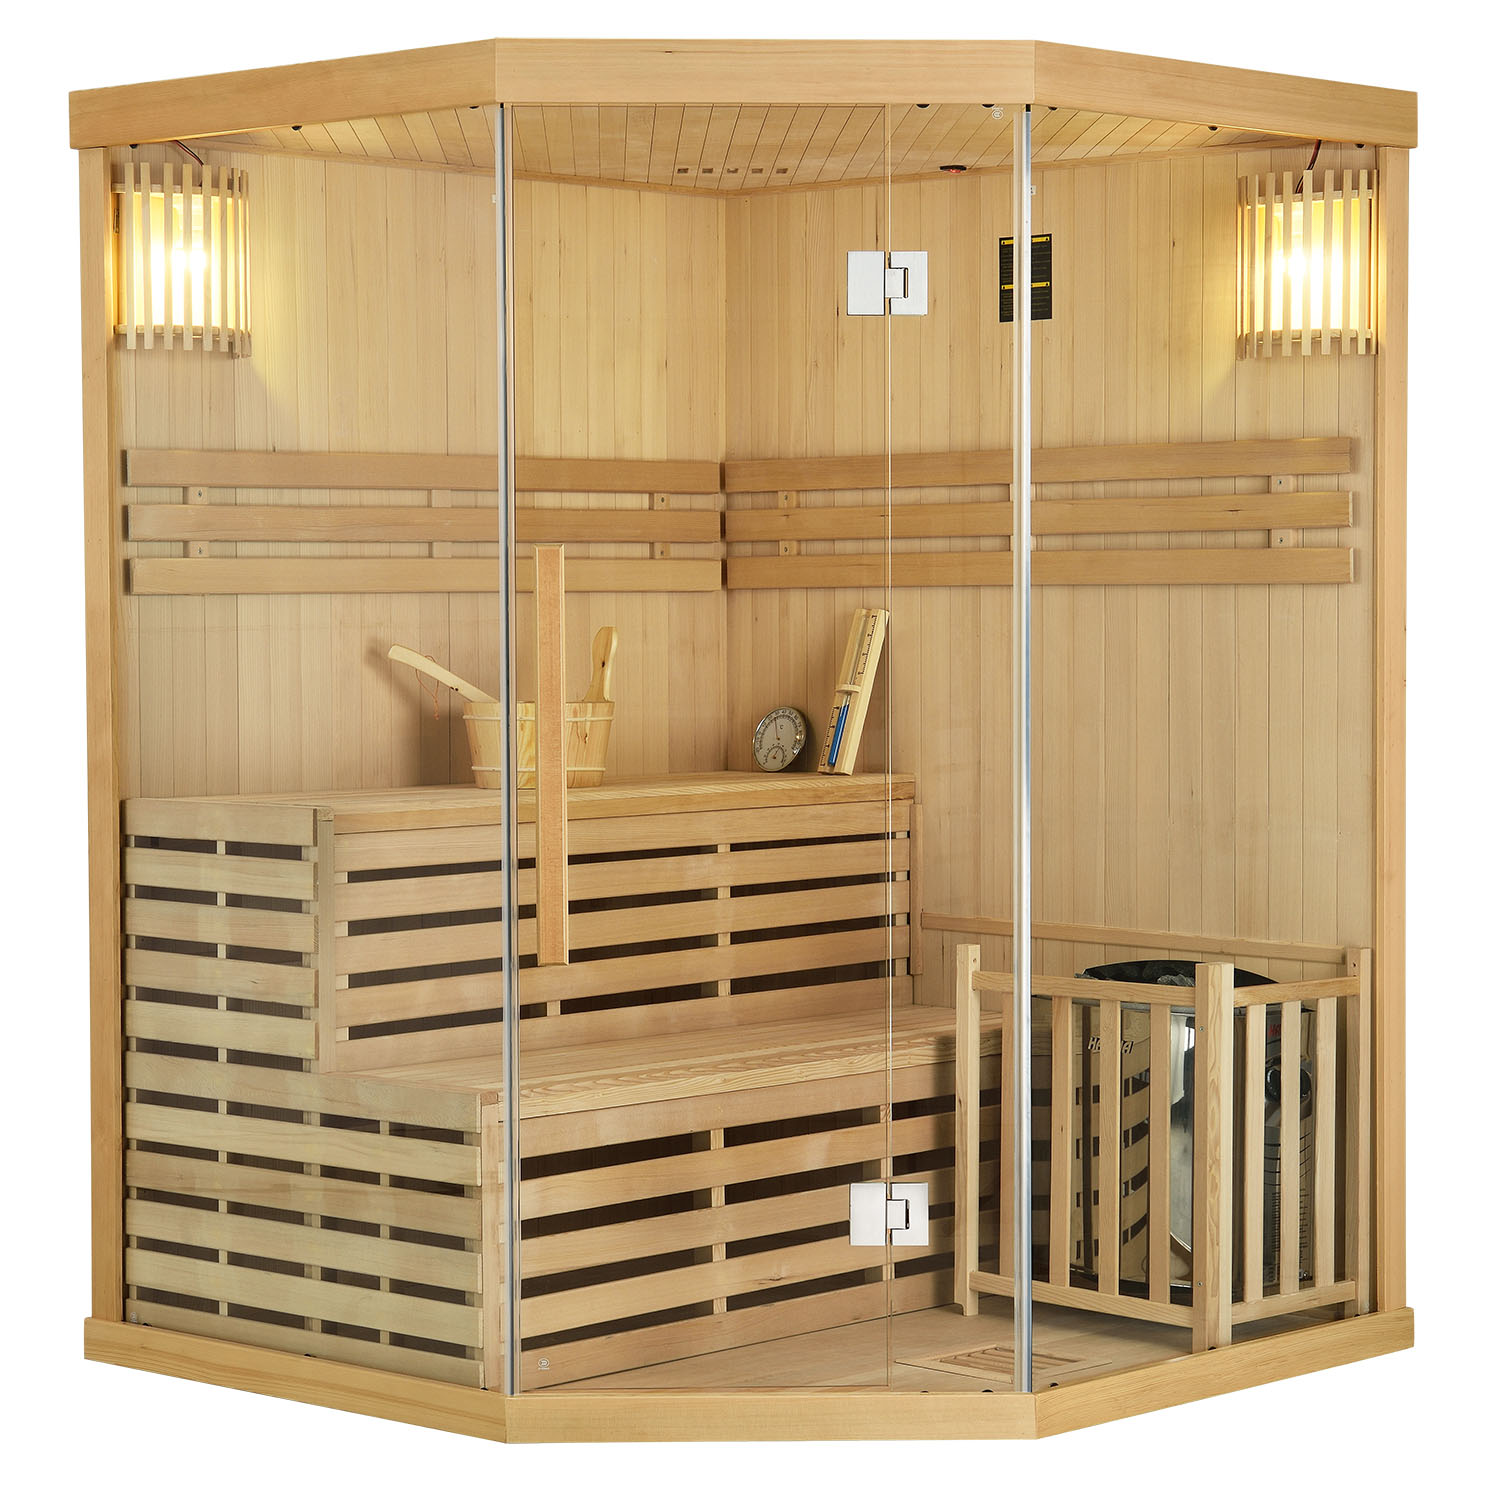 Juskys Tradičná saunová kabína / fínska sauna Espoo150 Premium - 150 x 150 cm 6 kW